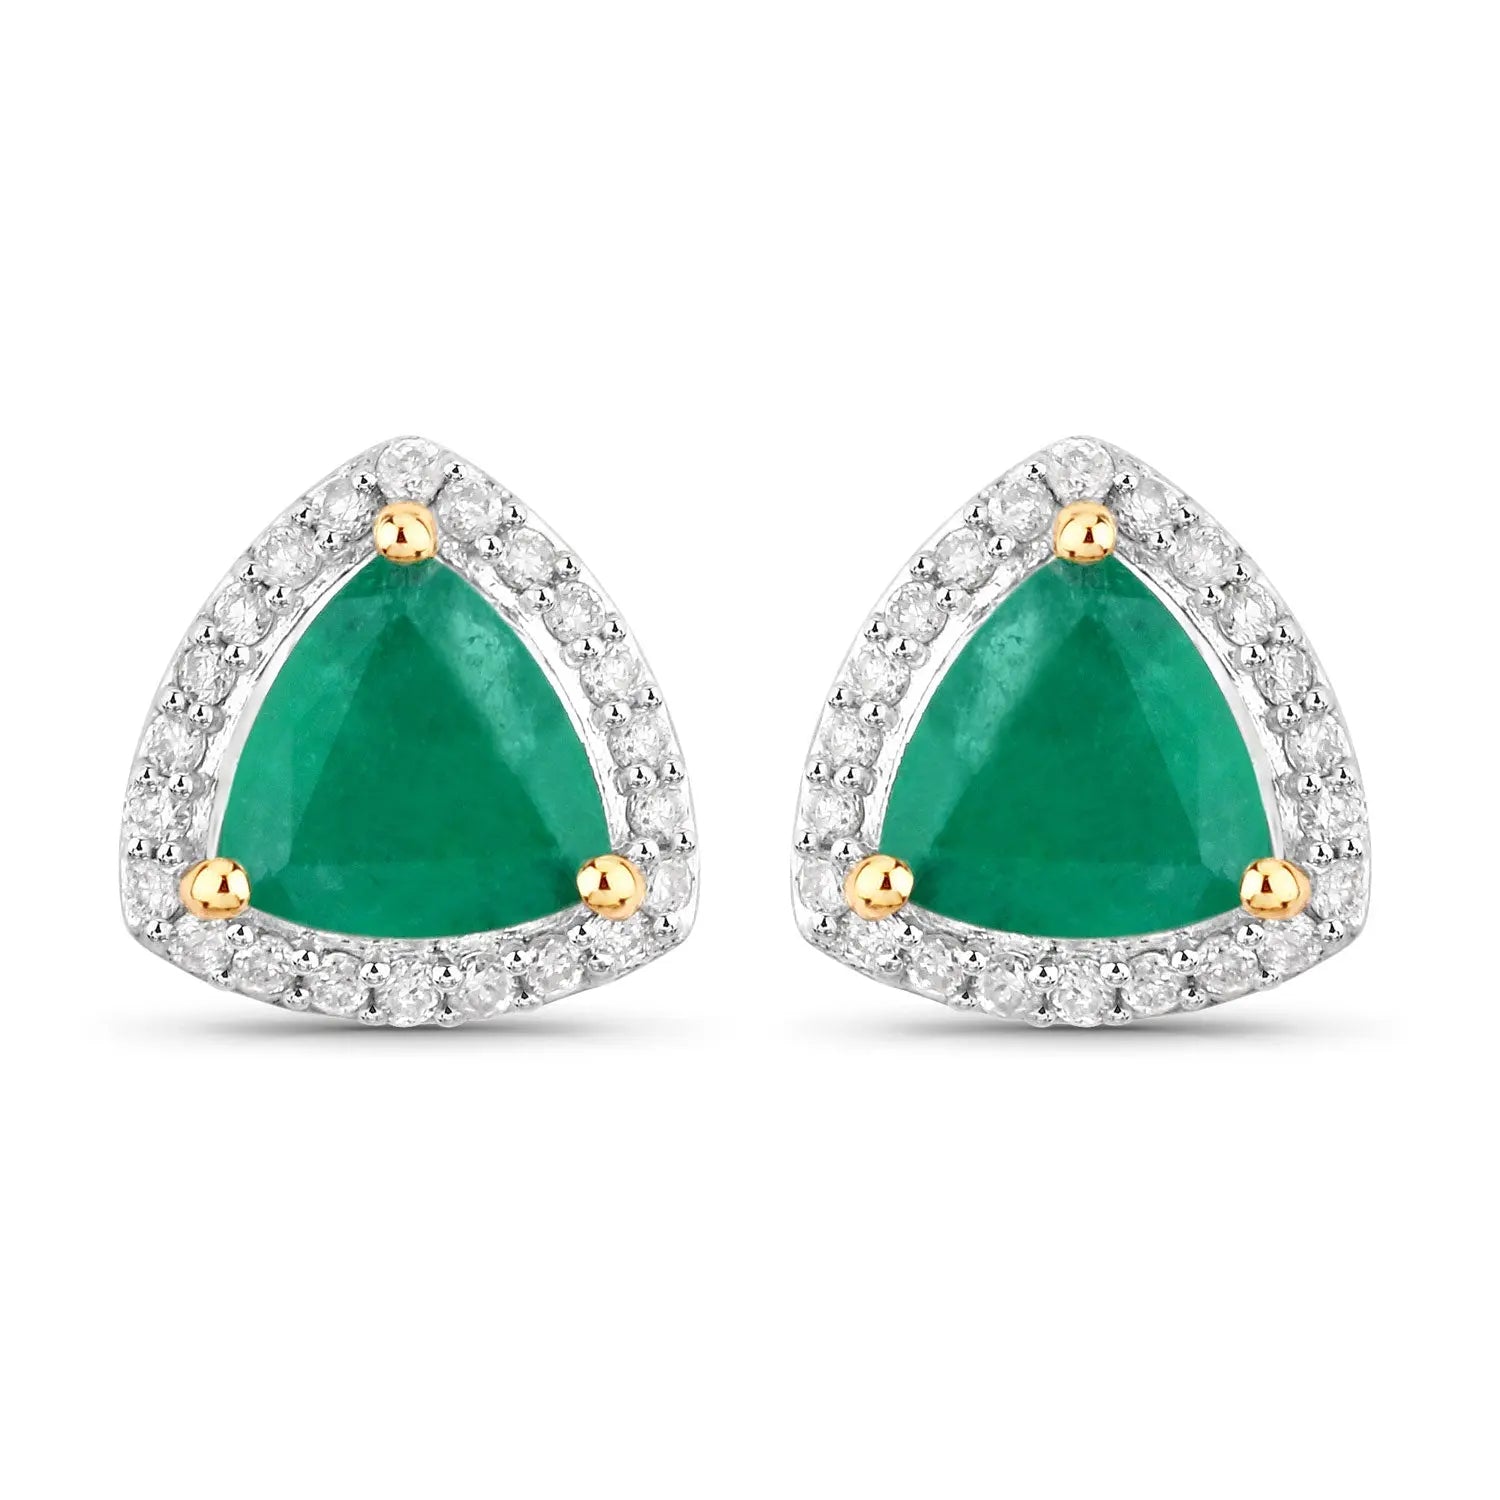 1.27 Carat Genuine Zambian Emerald and White Diamond 14K Yellow Gold Earrings - GOLDISSEYA